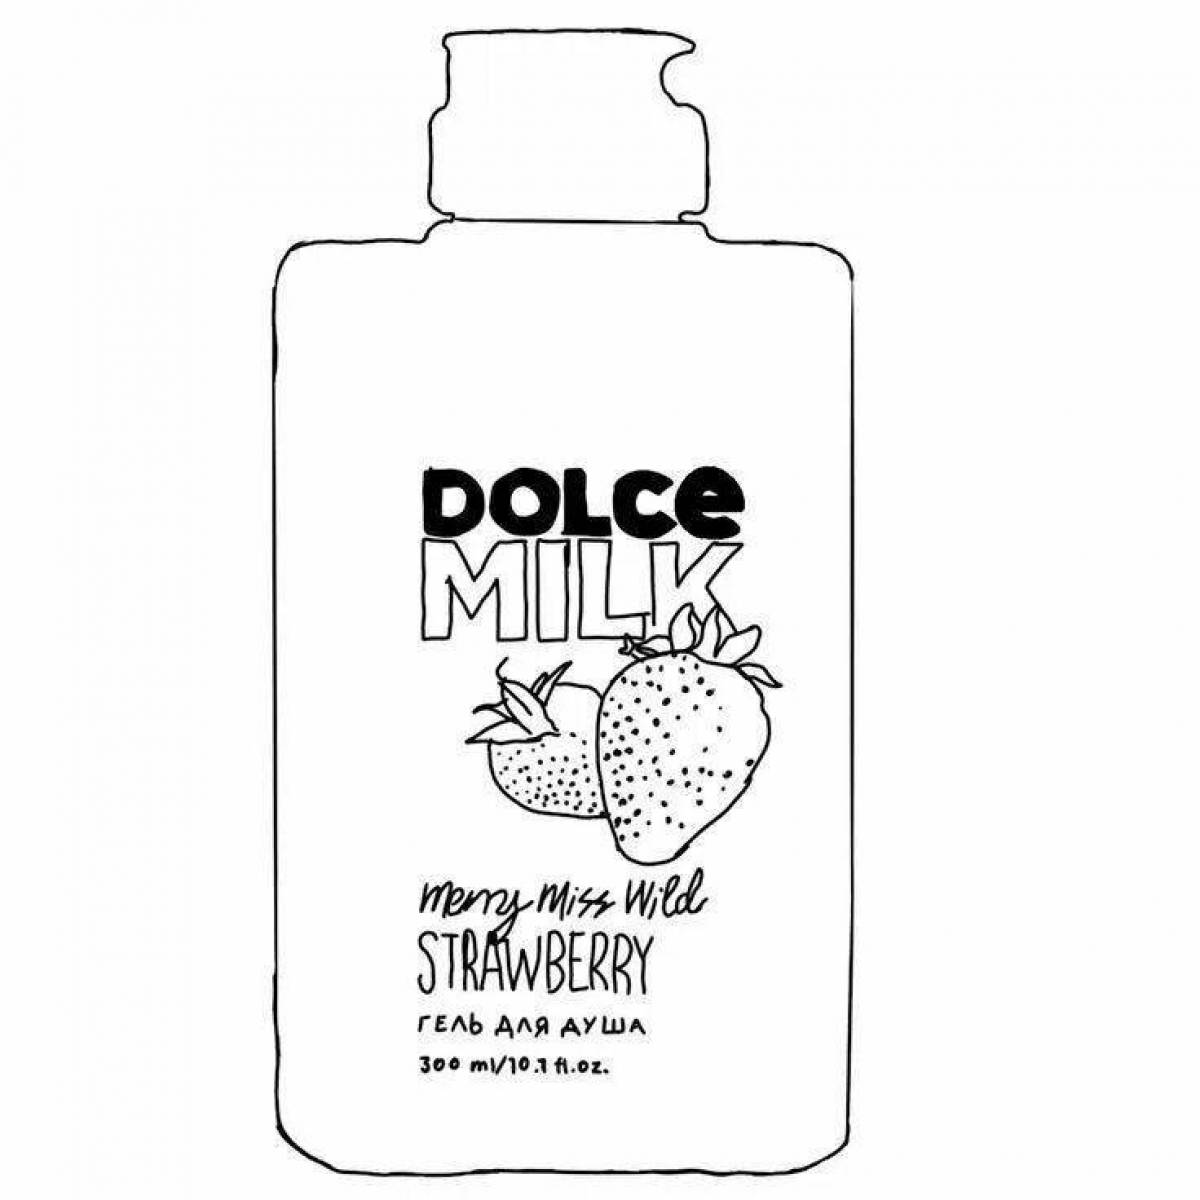 Joyful dolce milk coloring page